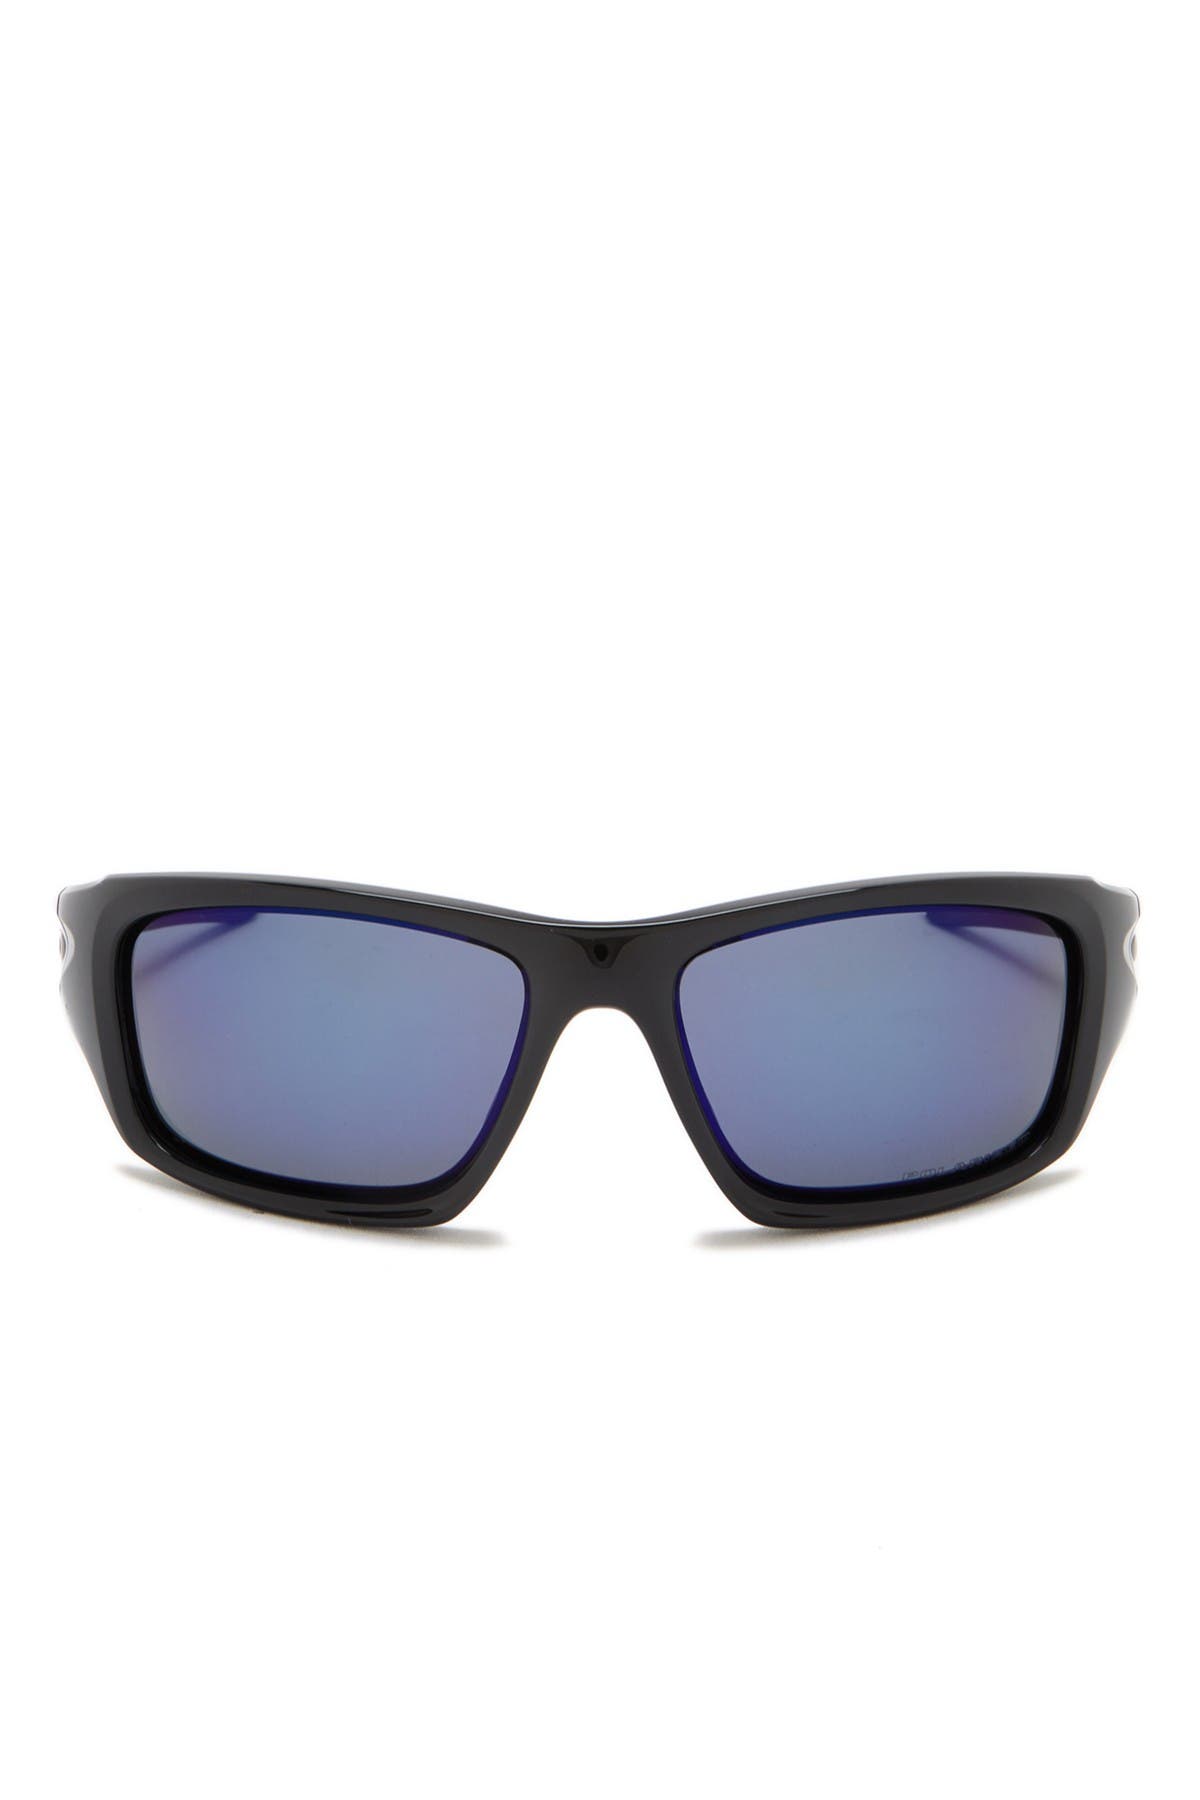 oakley valve polarized 60mm wrap sunglasses